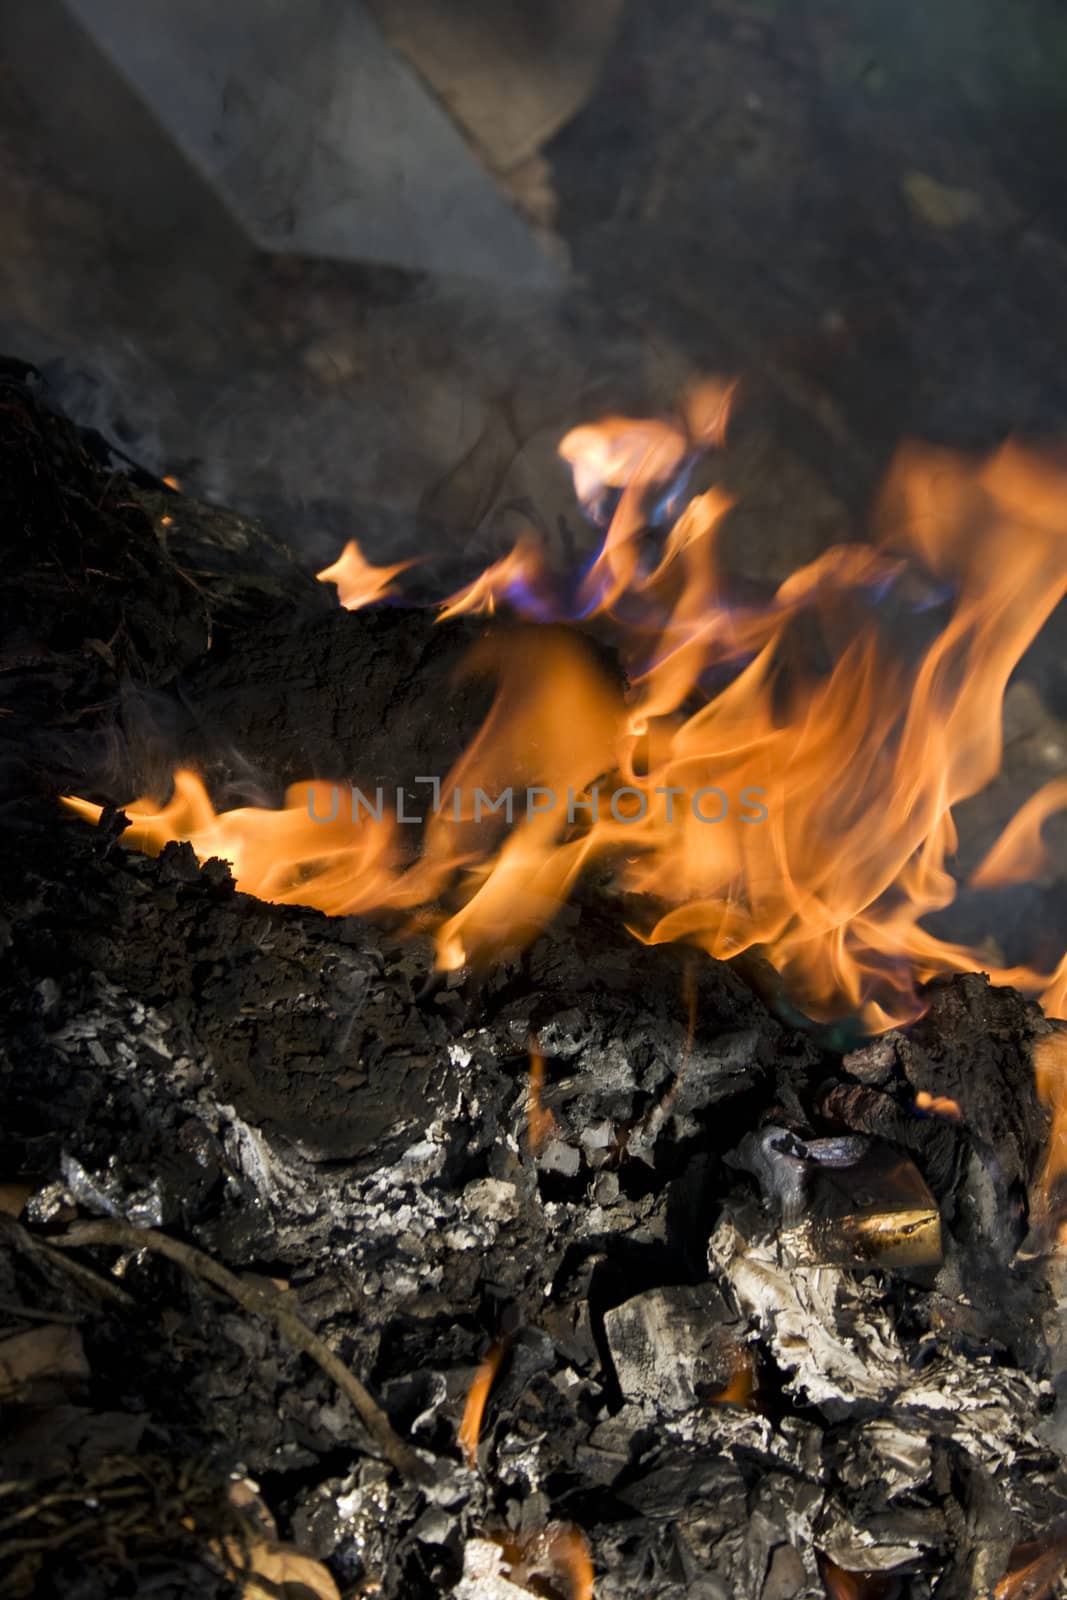 Burning rubbish by BengLim